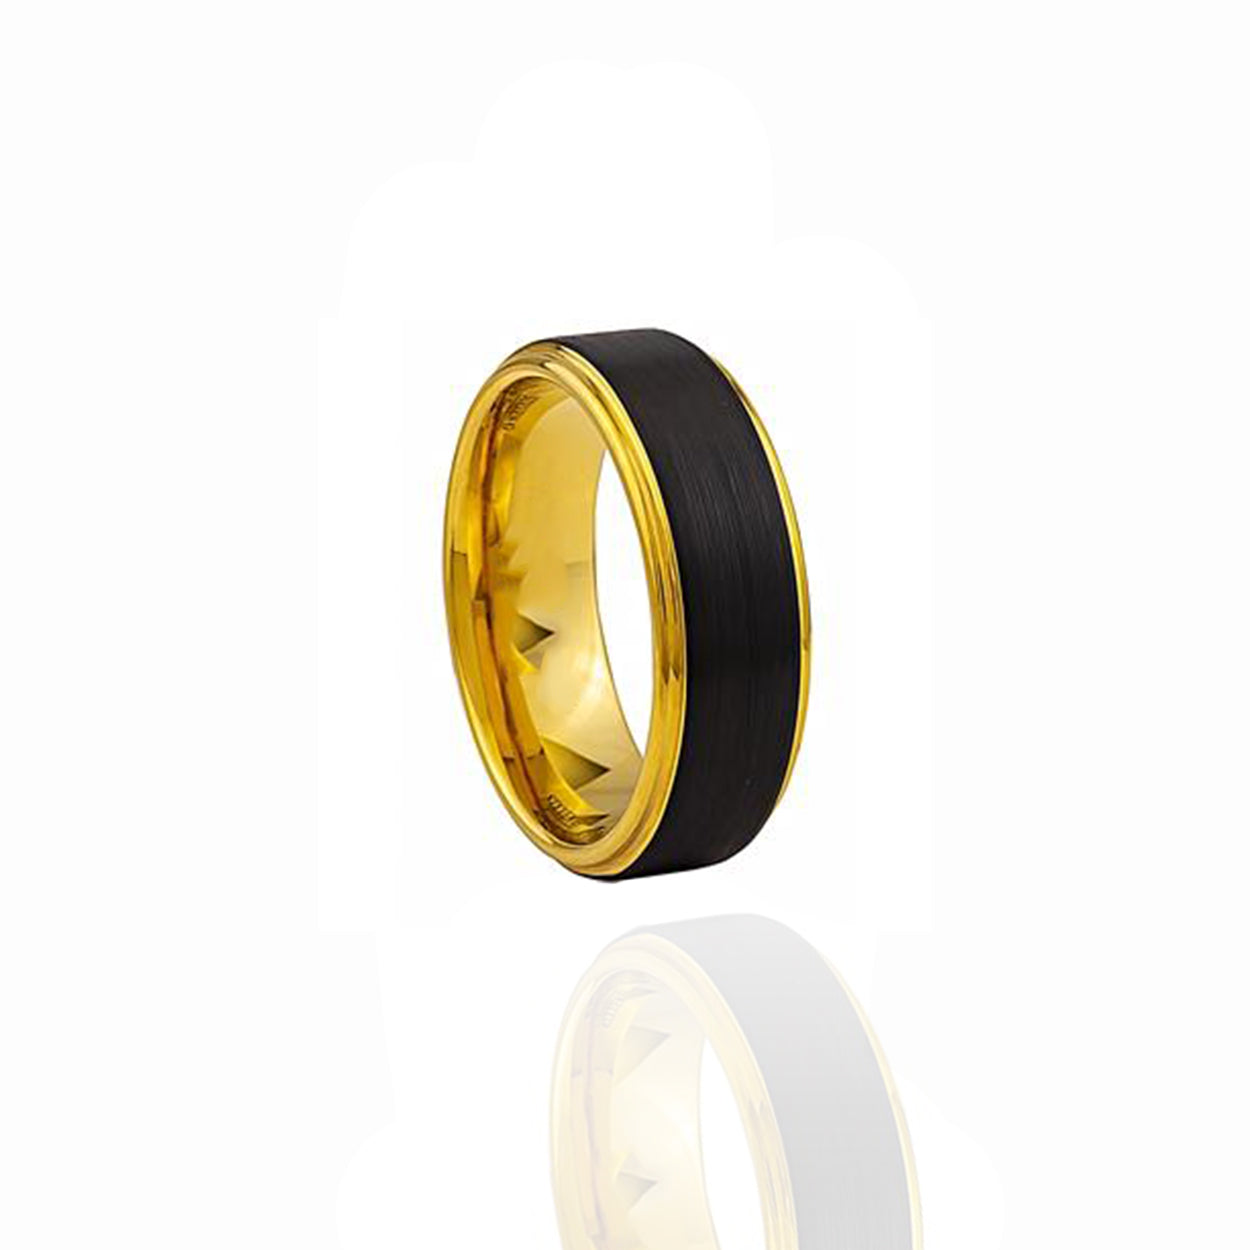 Machine Edged Yellow and Black Tungsten Carbide Ring